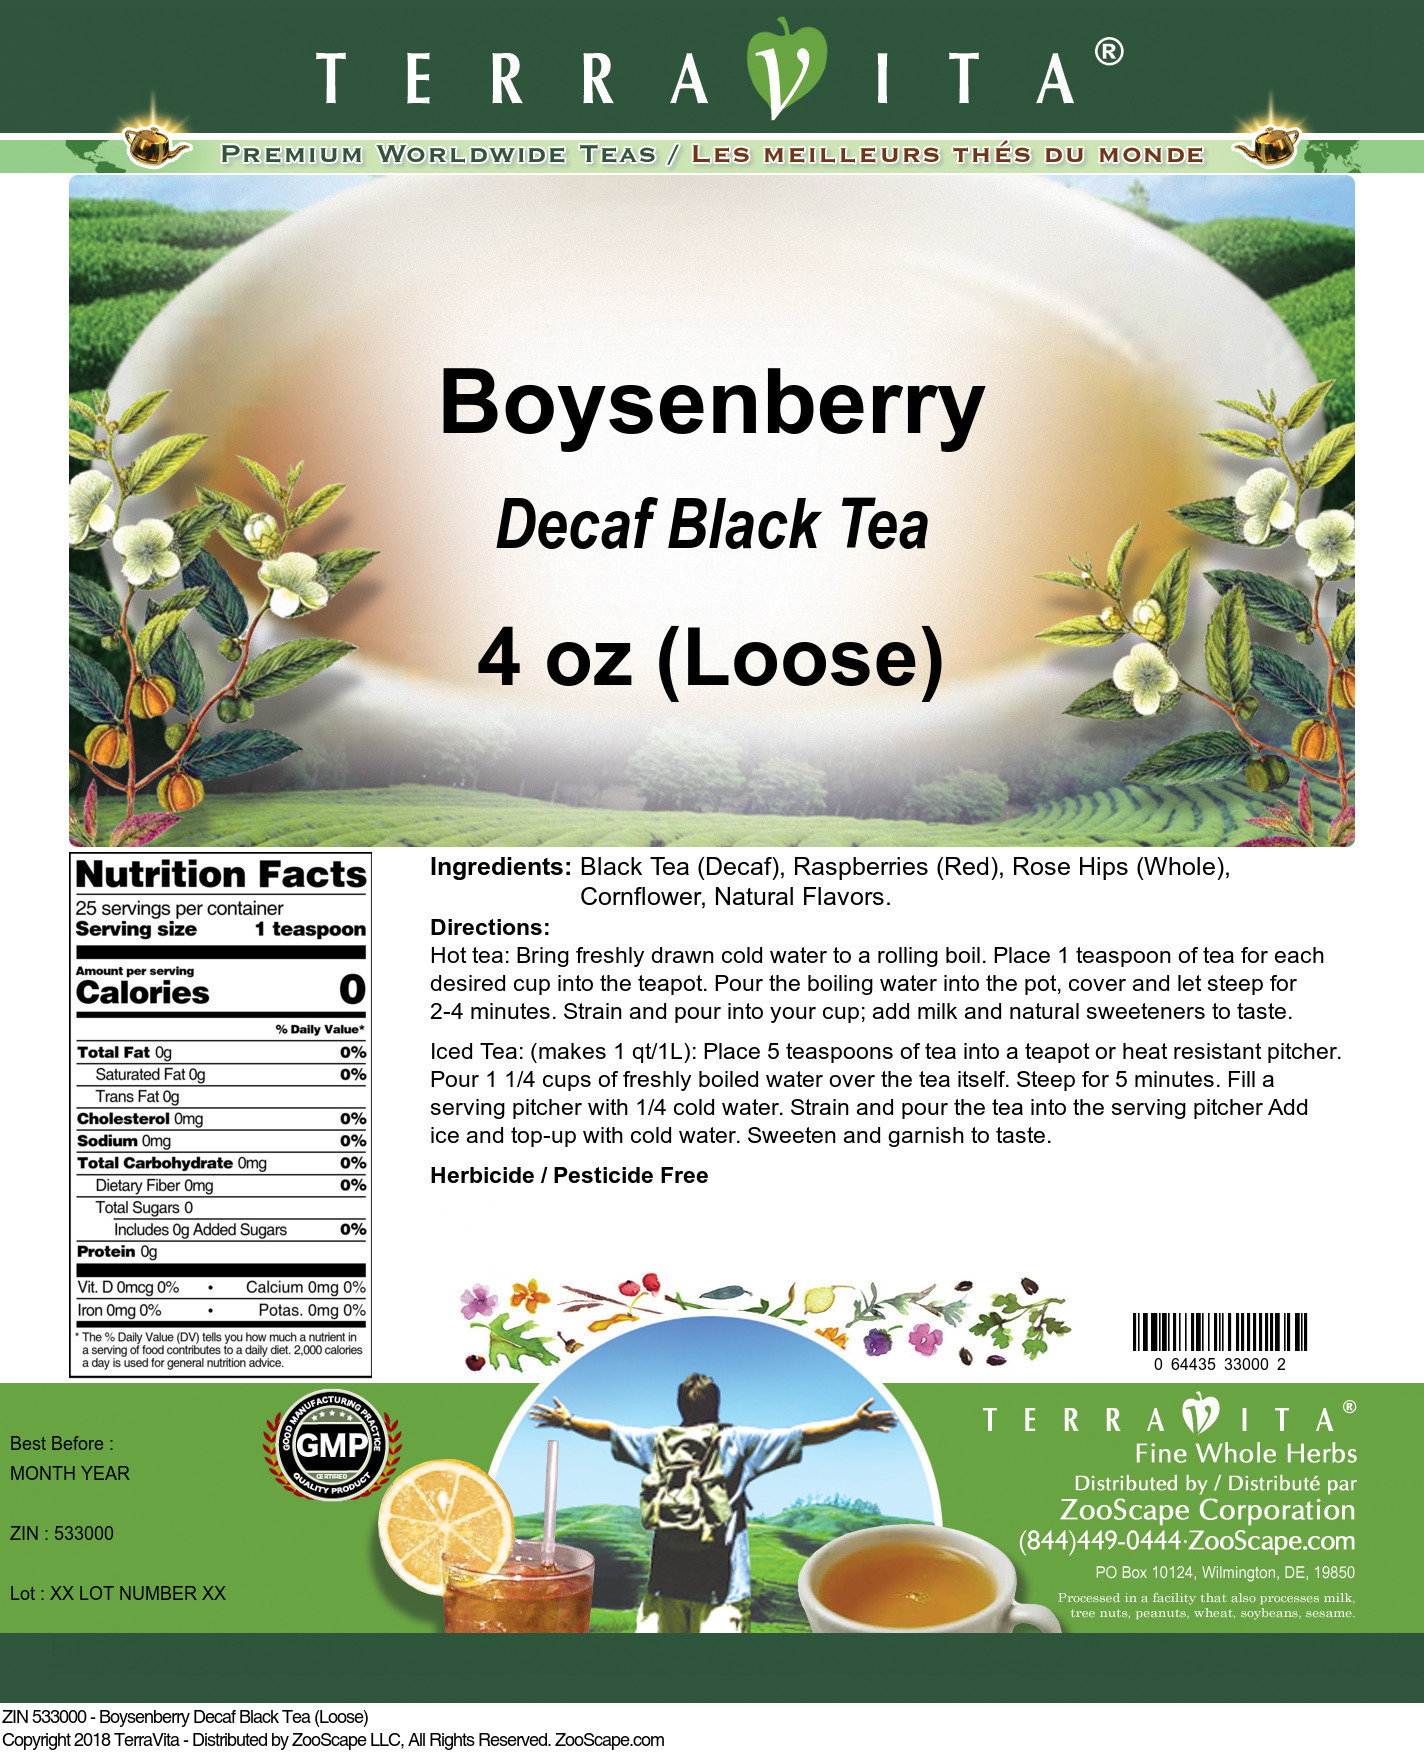 Boysenberry Decaf Black Tea (Loose) - Label